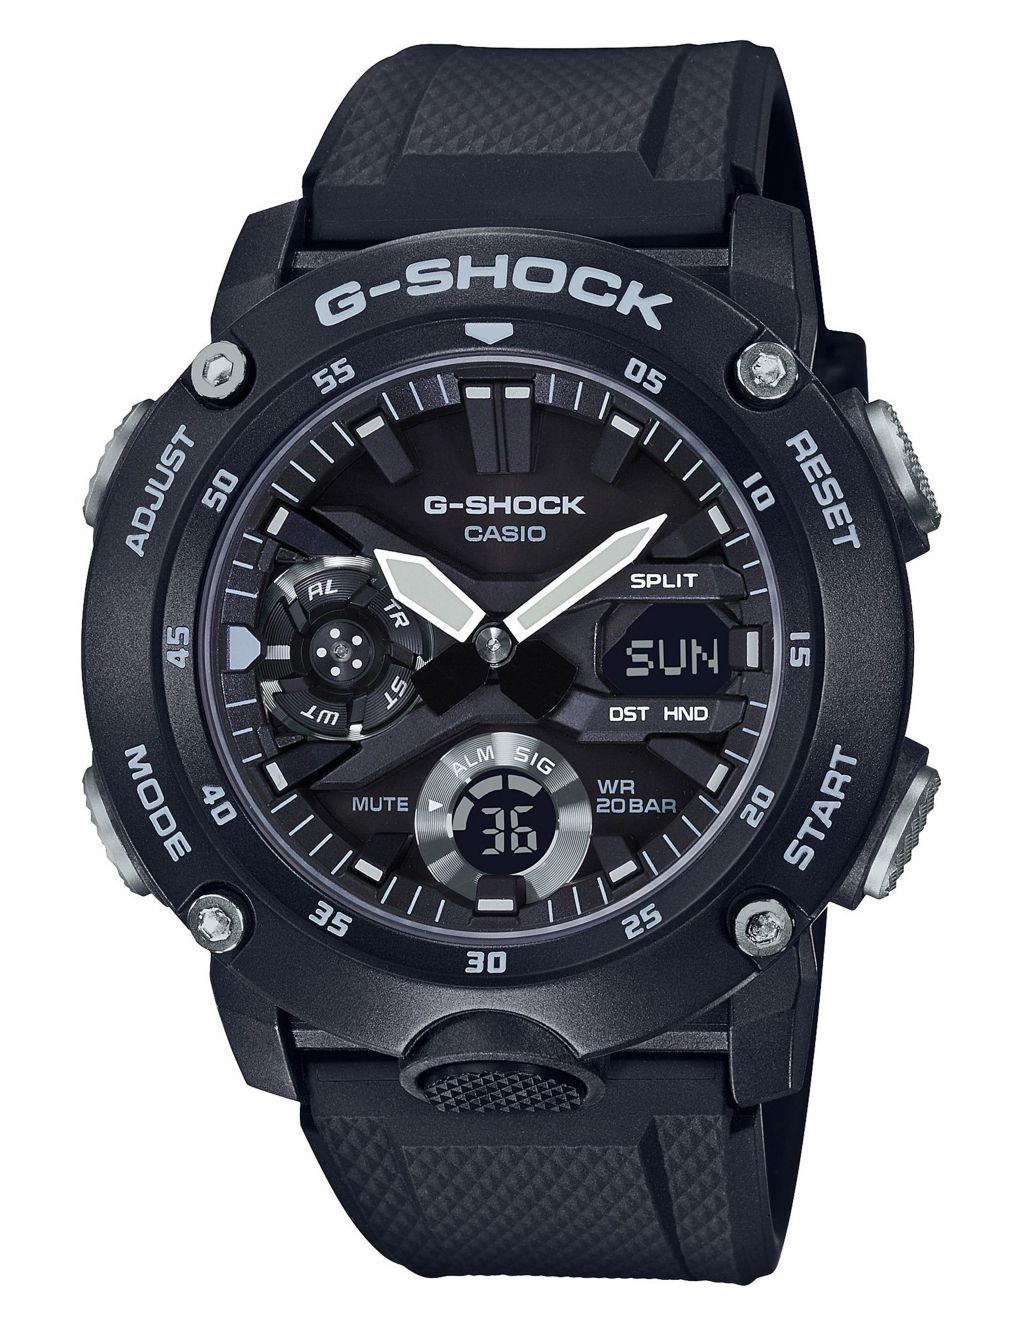 Casio G-Shock Waterproof Watch image 1